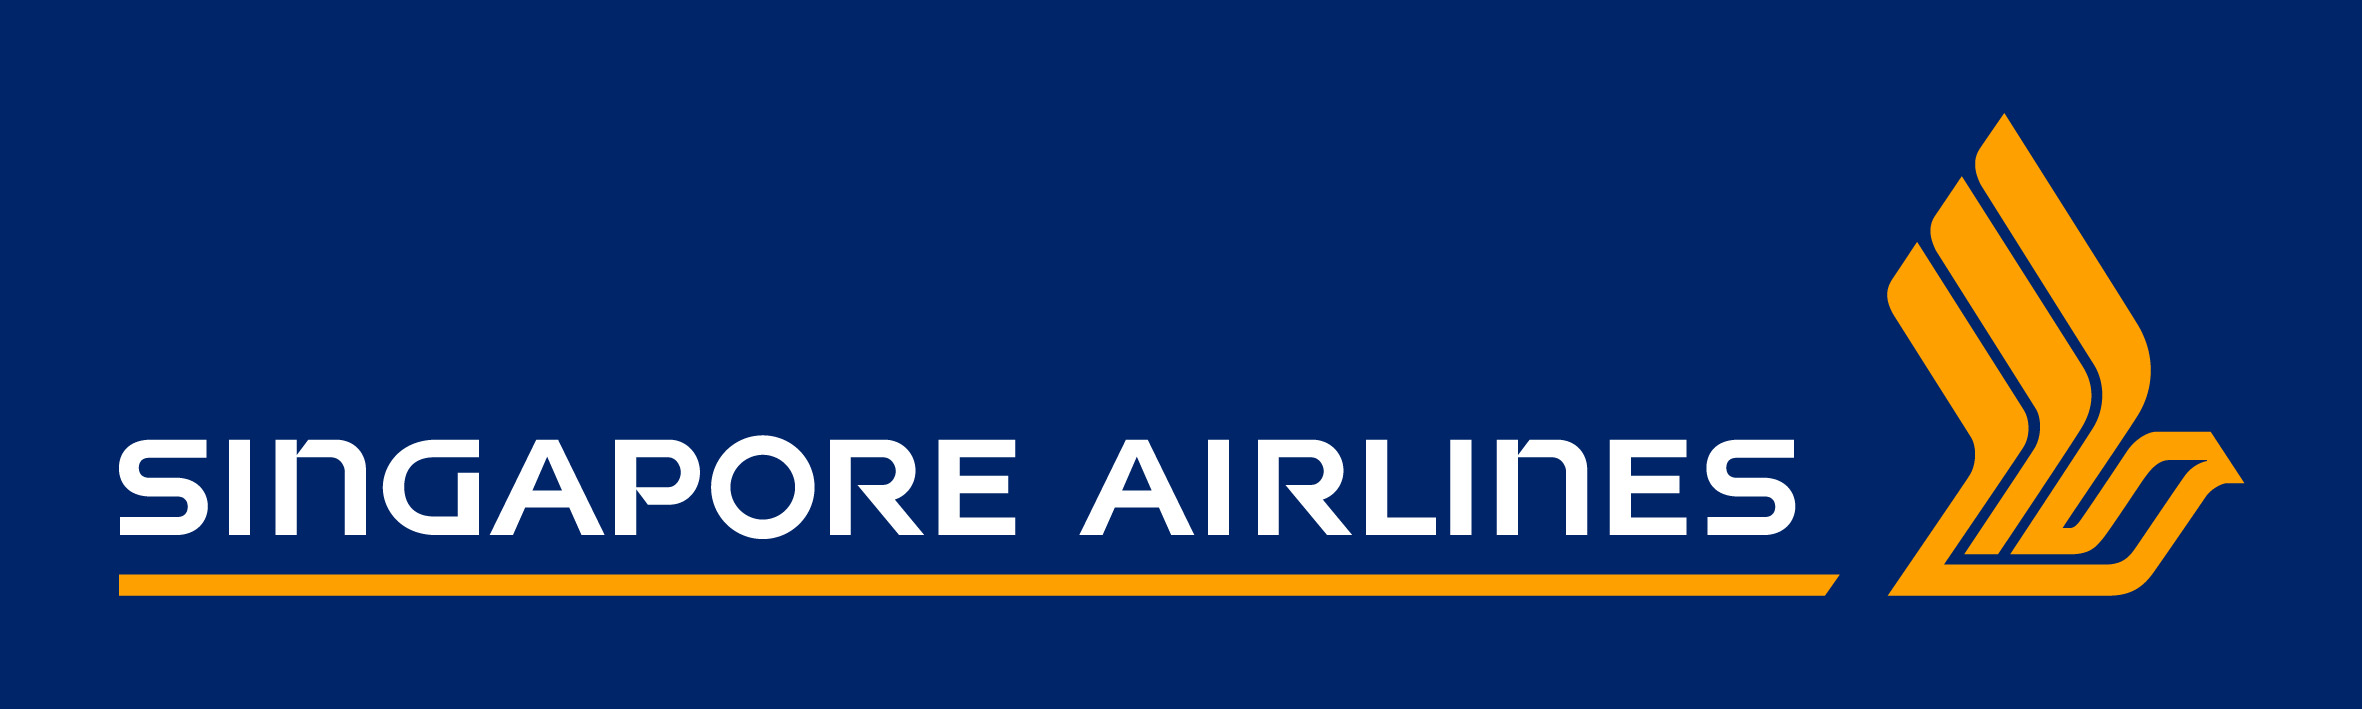 Singapore Airlines_Logo.jpg